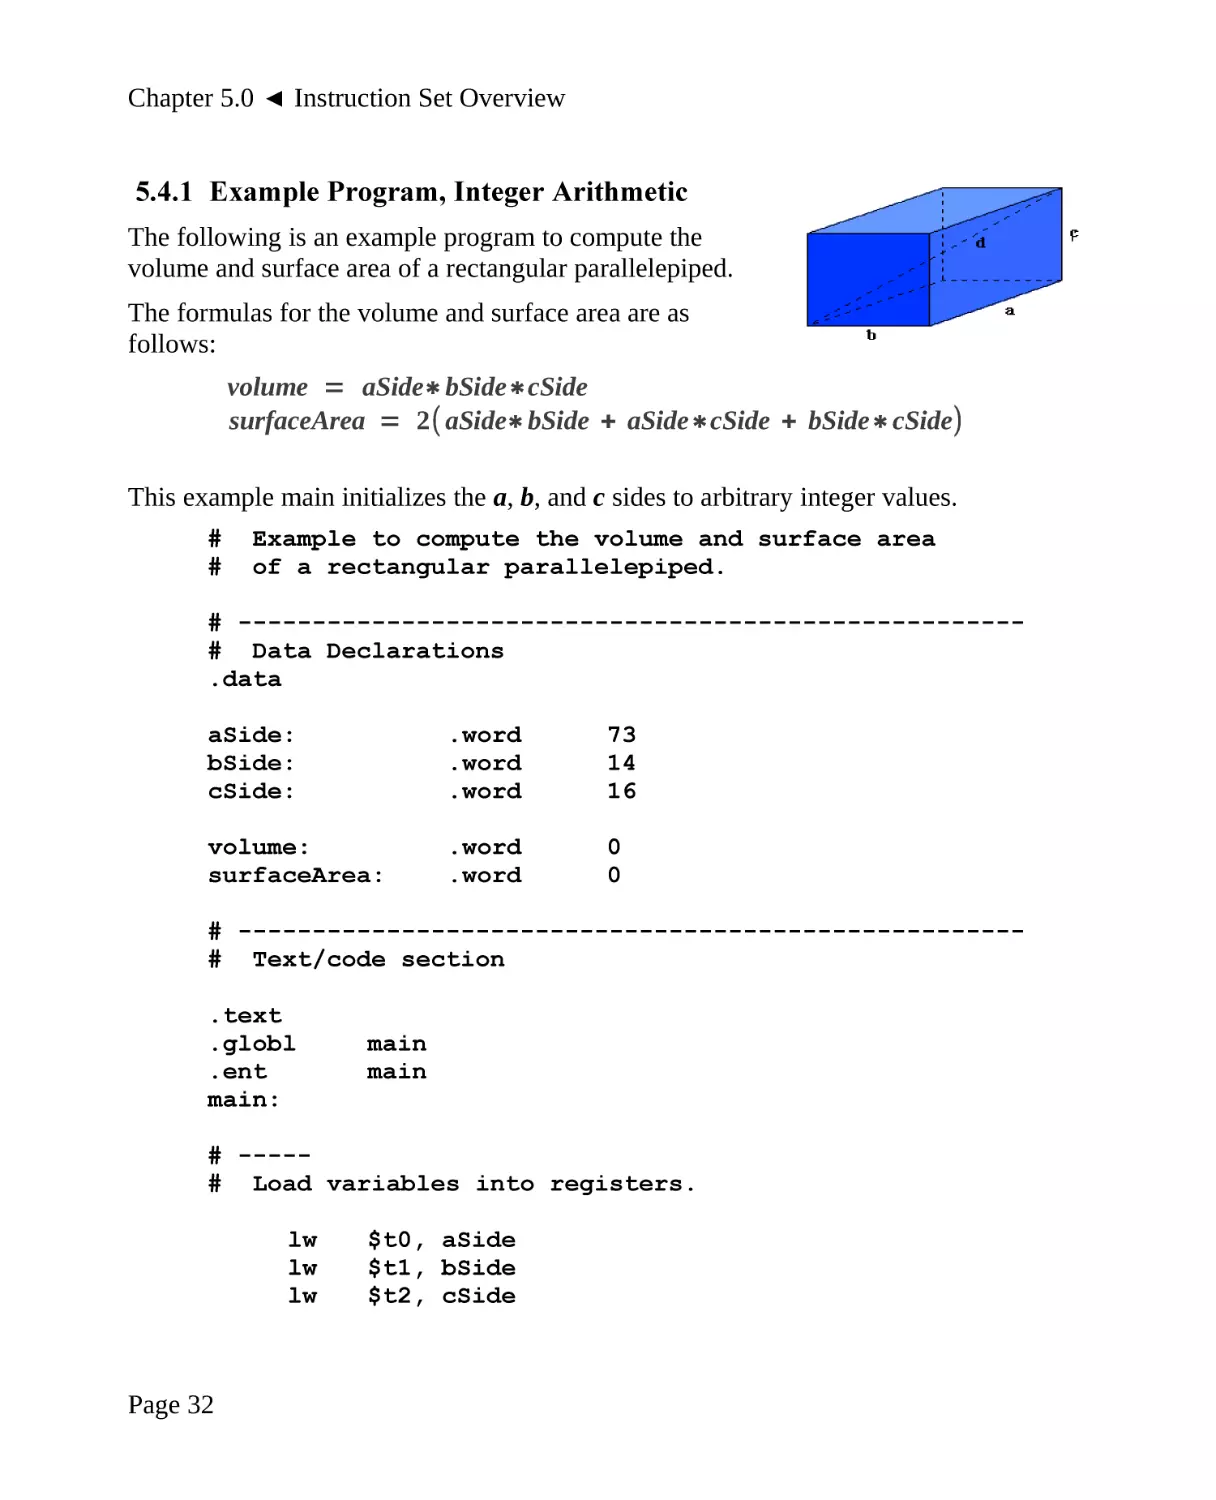 5.4.1 Example Program, Integer Arithmetic